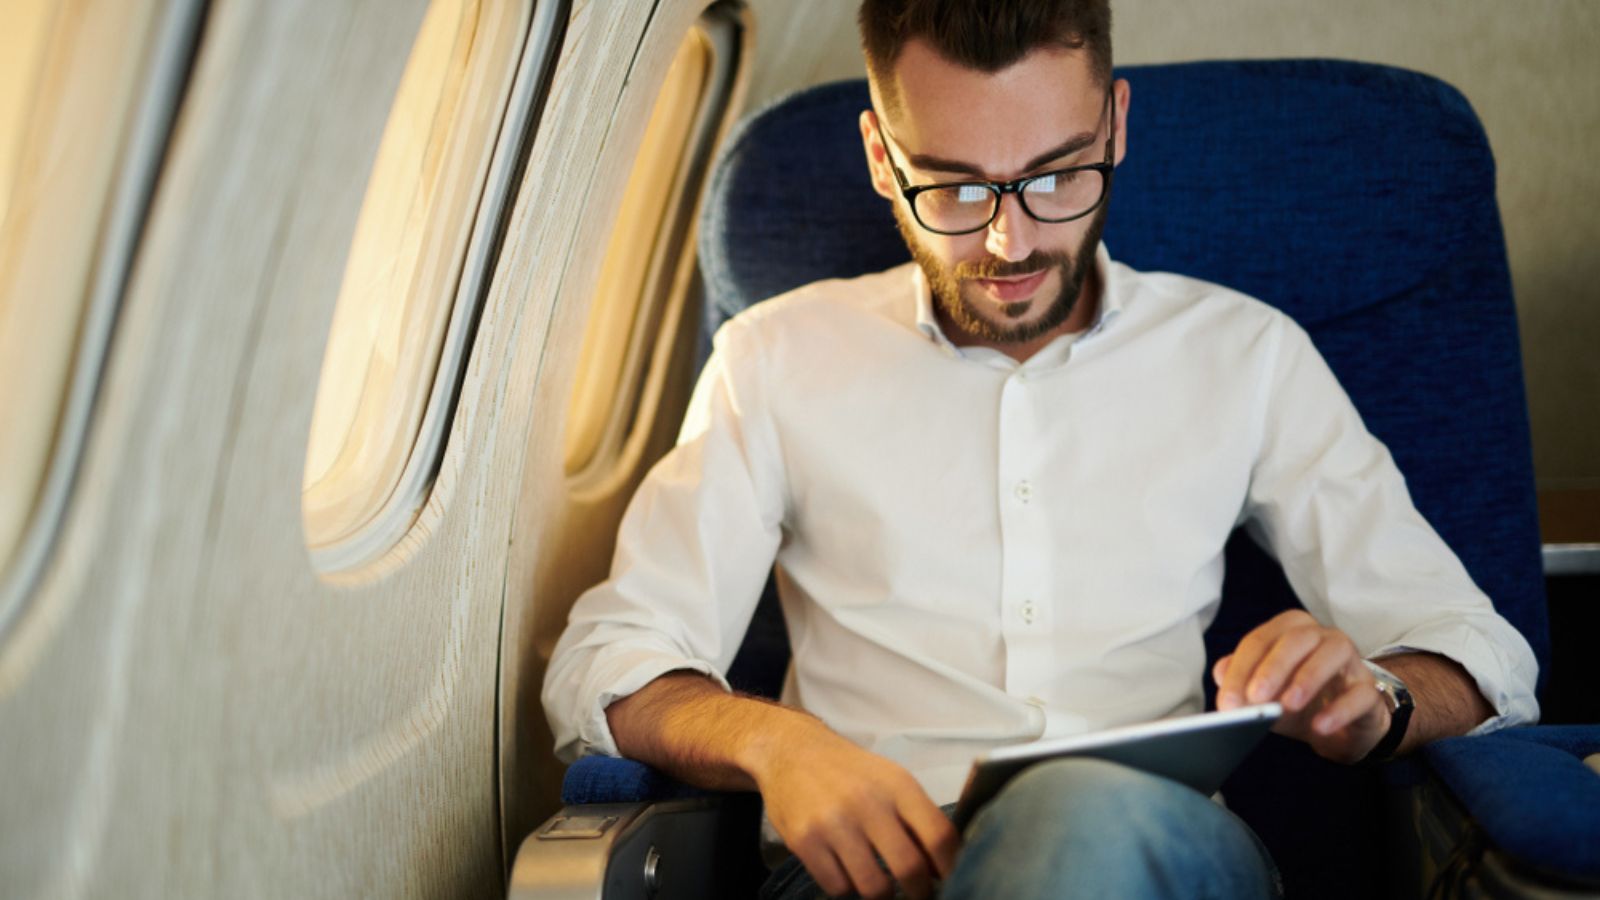 Professional reading on plane